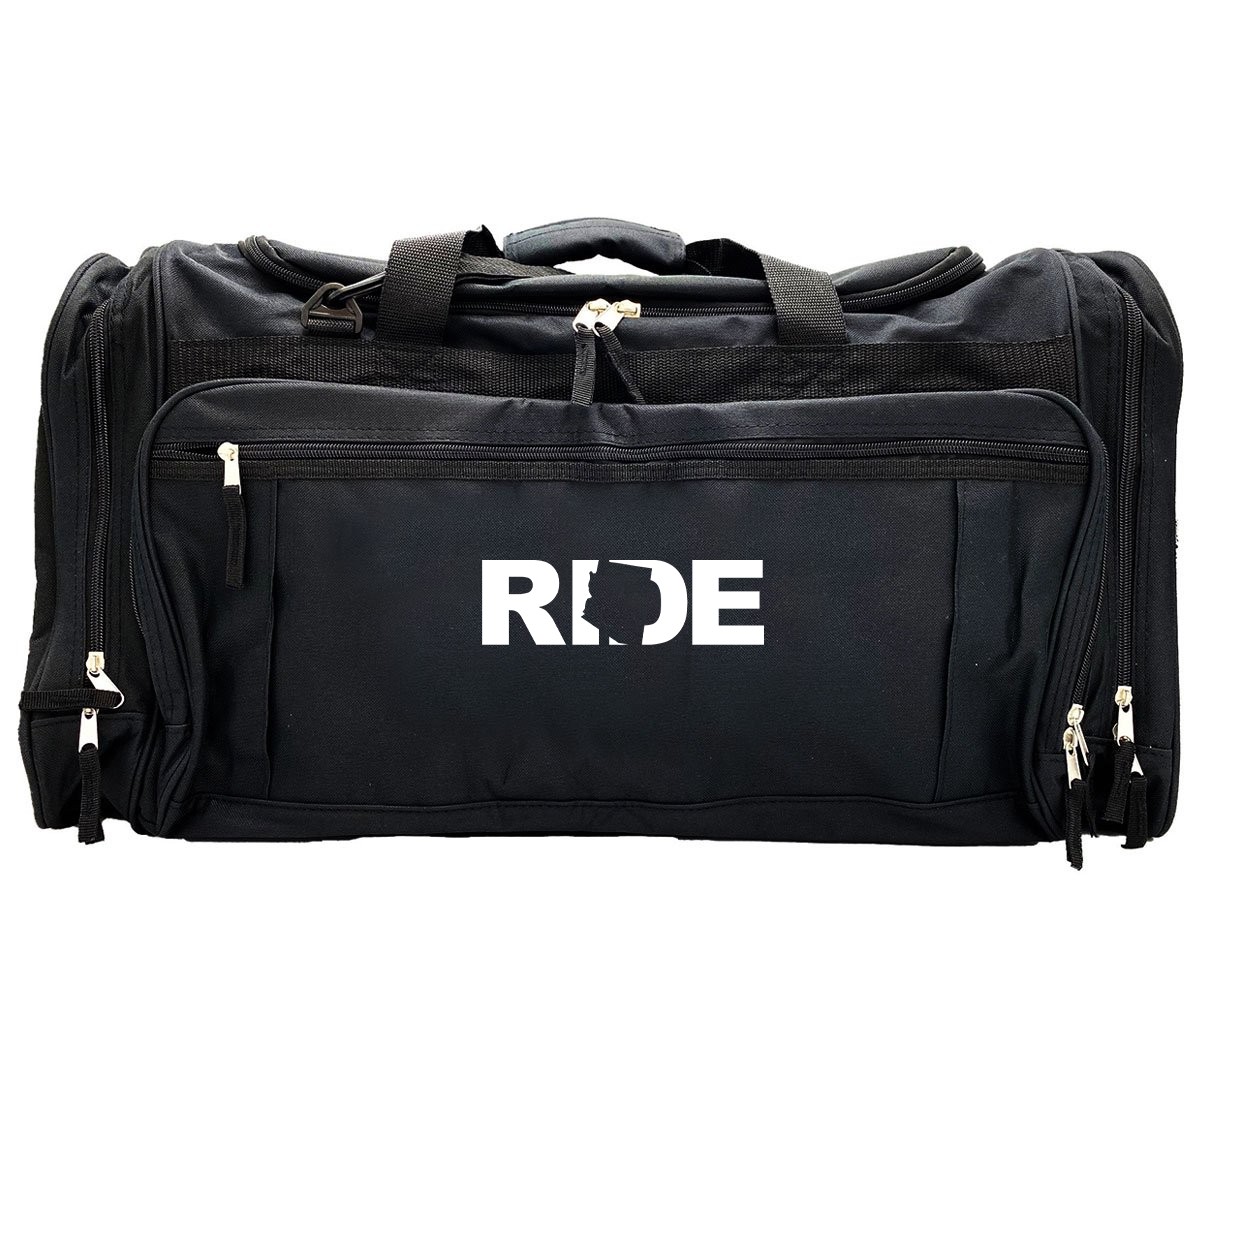 Ride Arizona Classic Explorer Large Duffel Bag Black (White Logo)